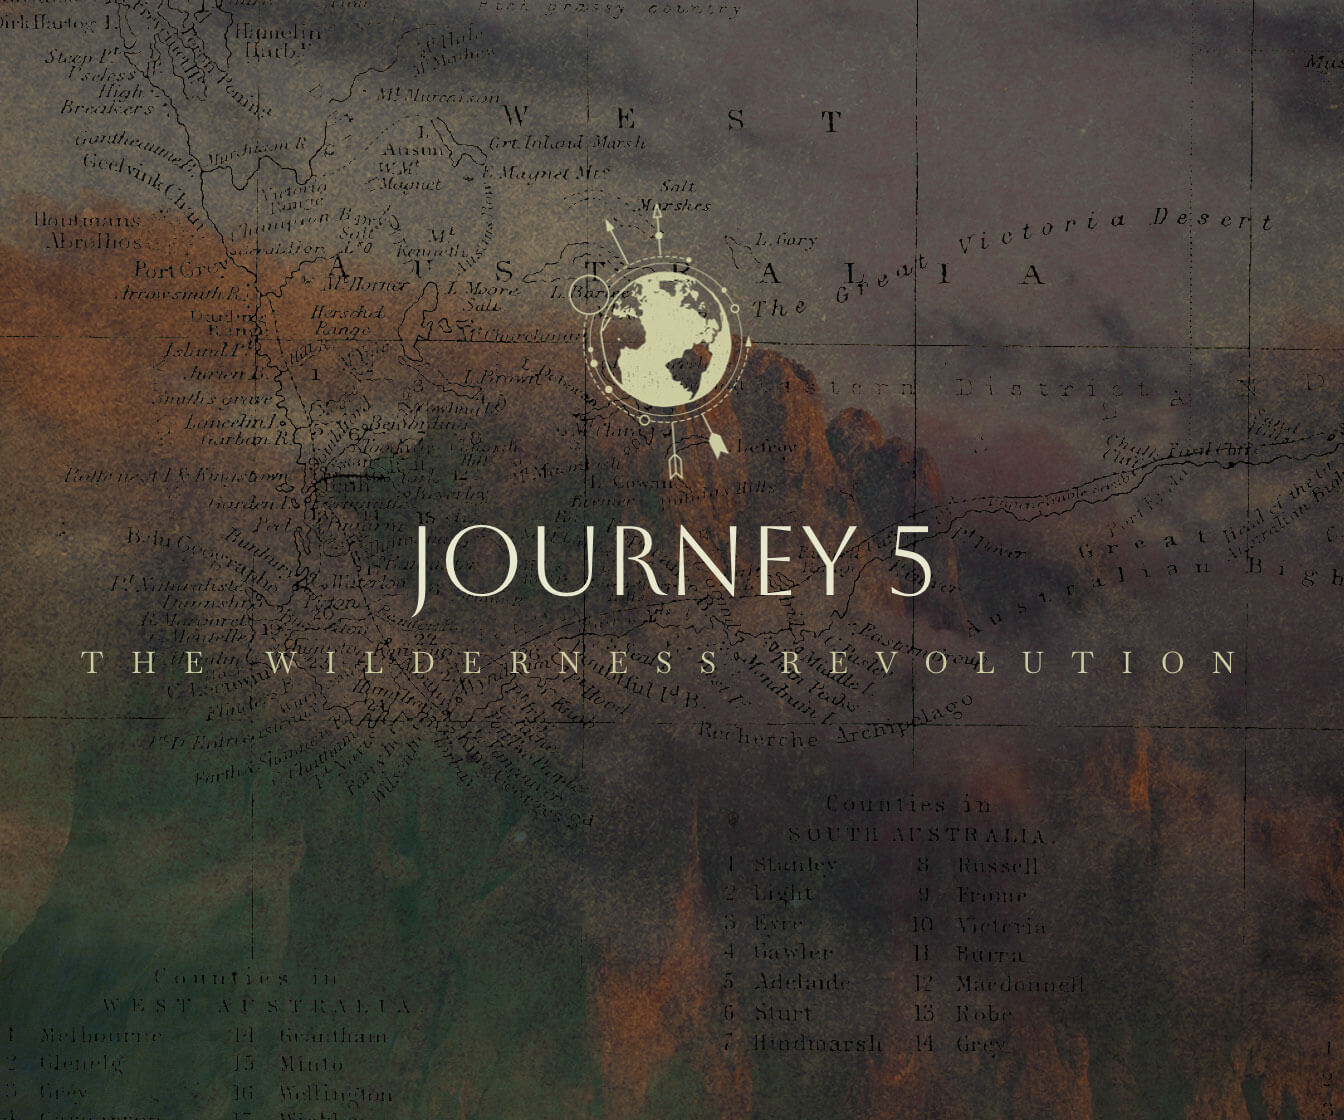 The Wild Ones Journey 5 - The Wilderness Revolution